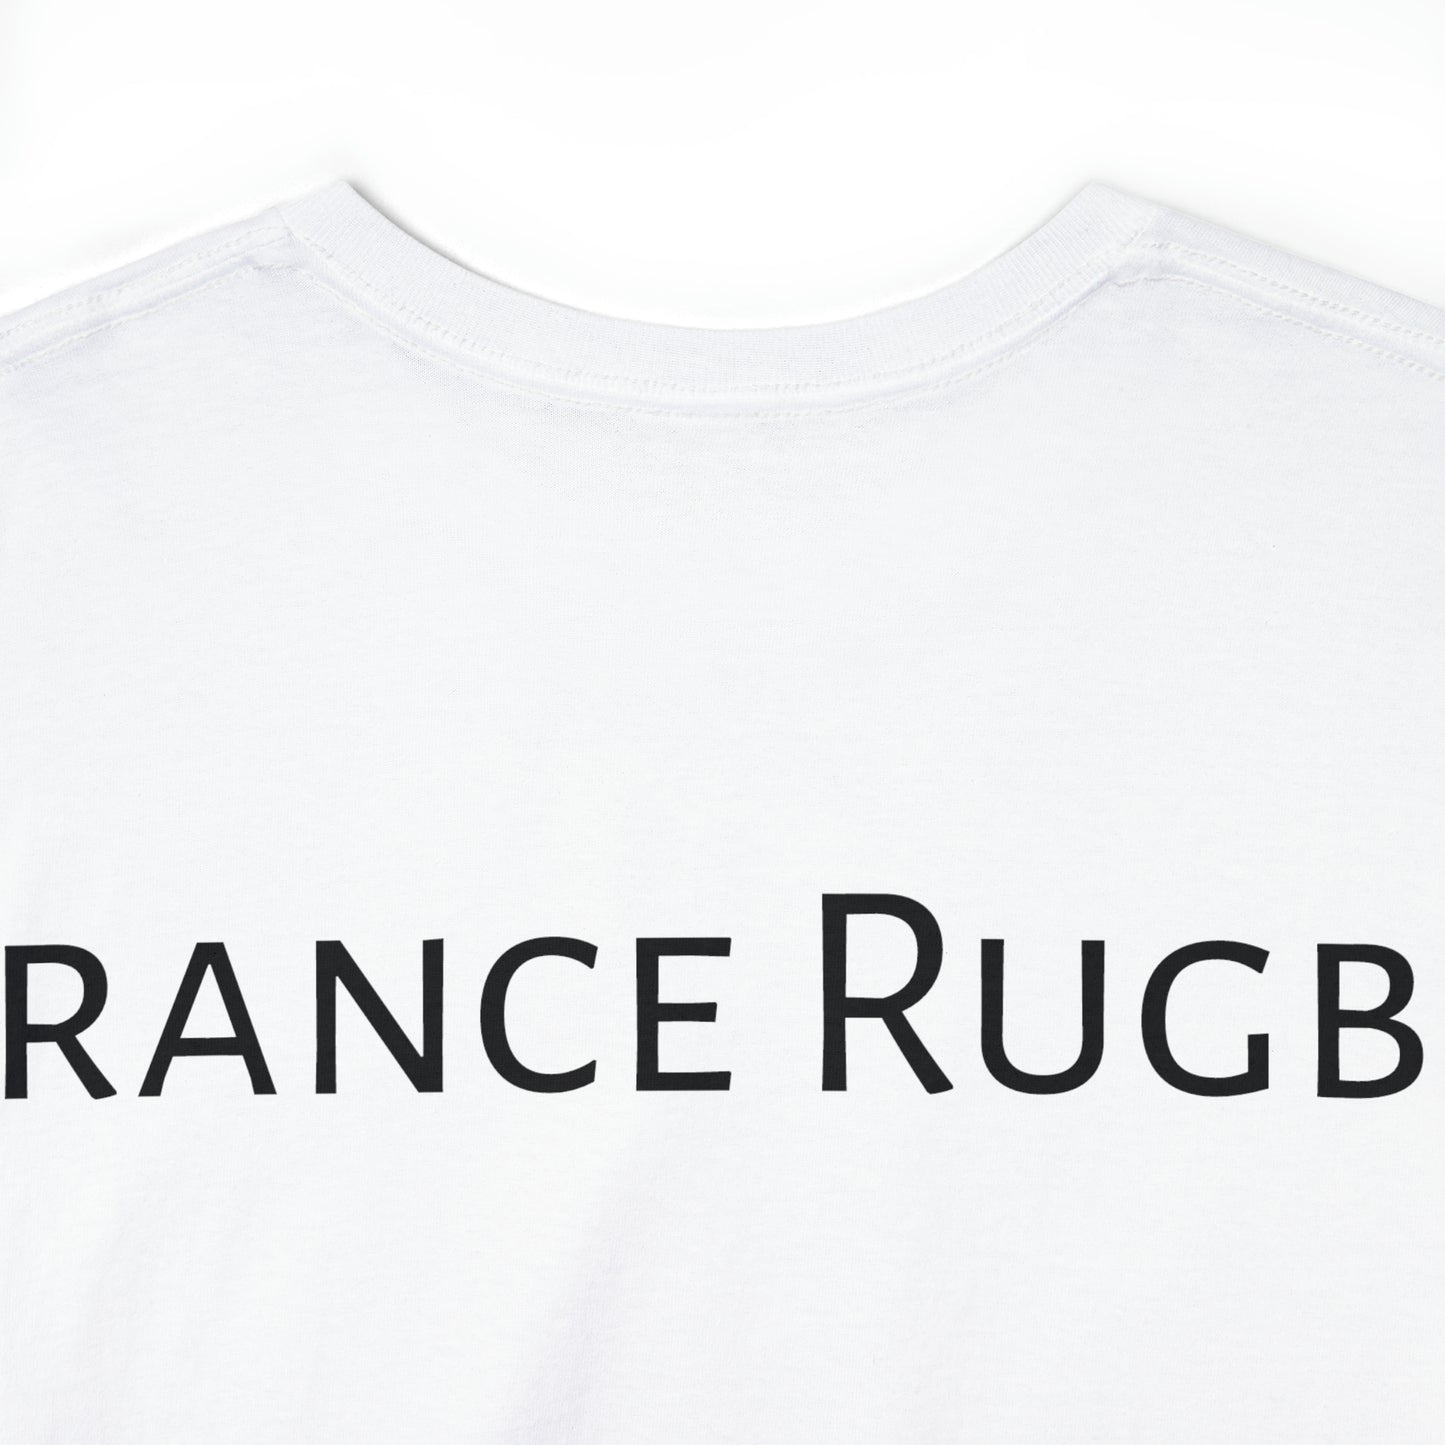 Ready France - light shirts